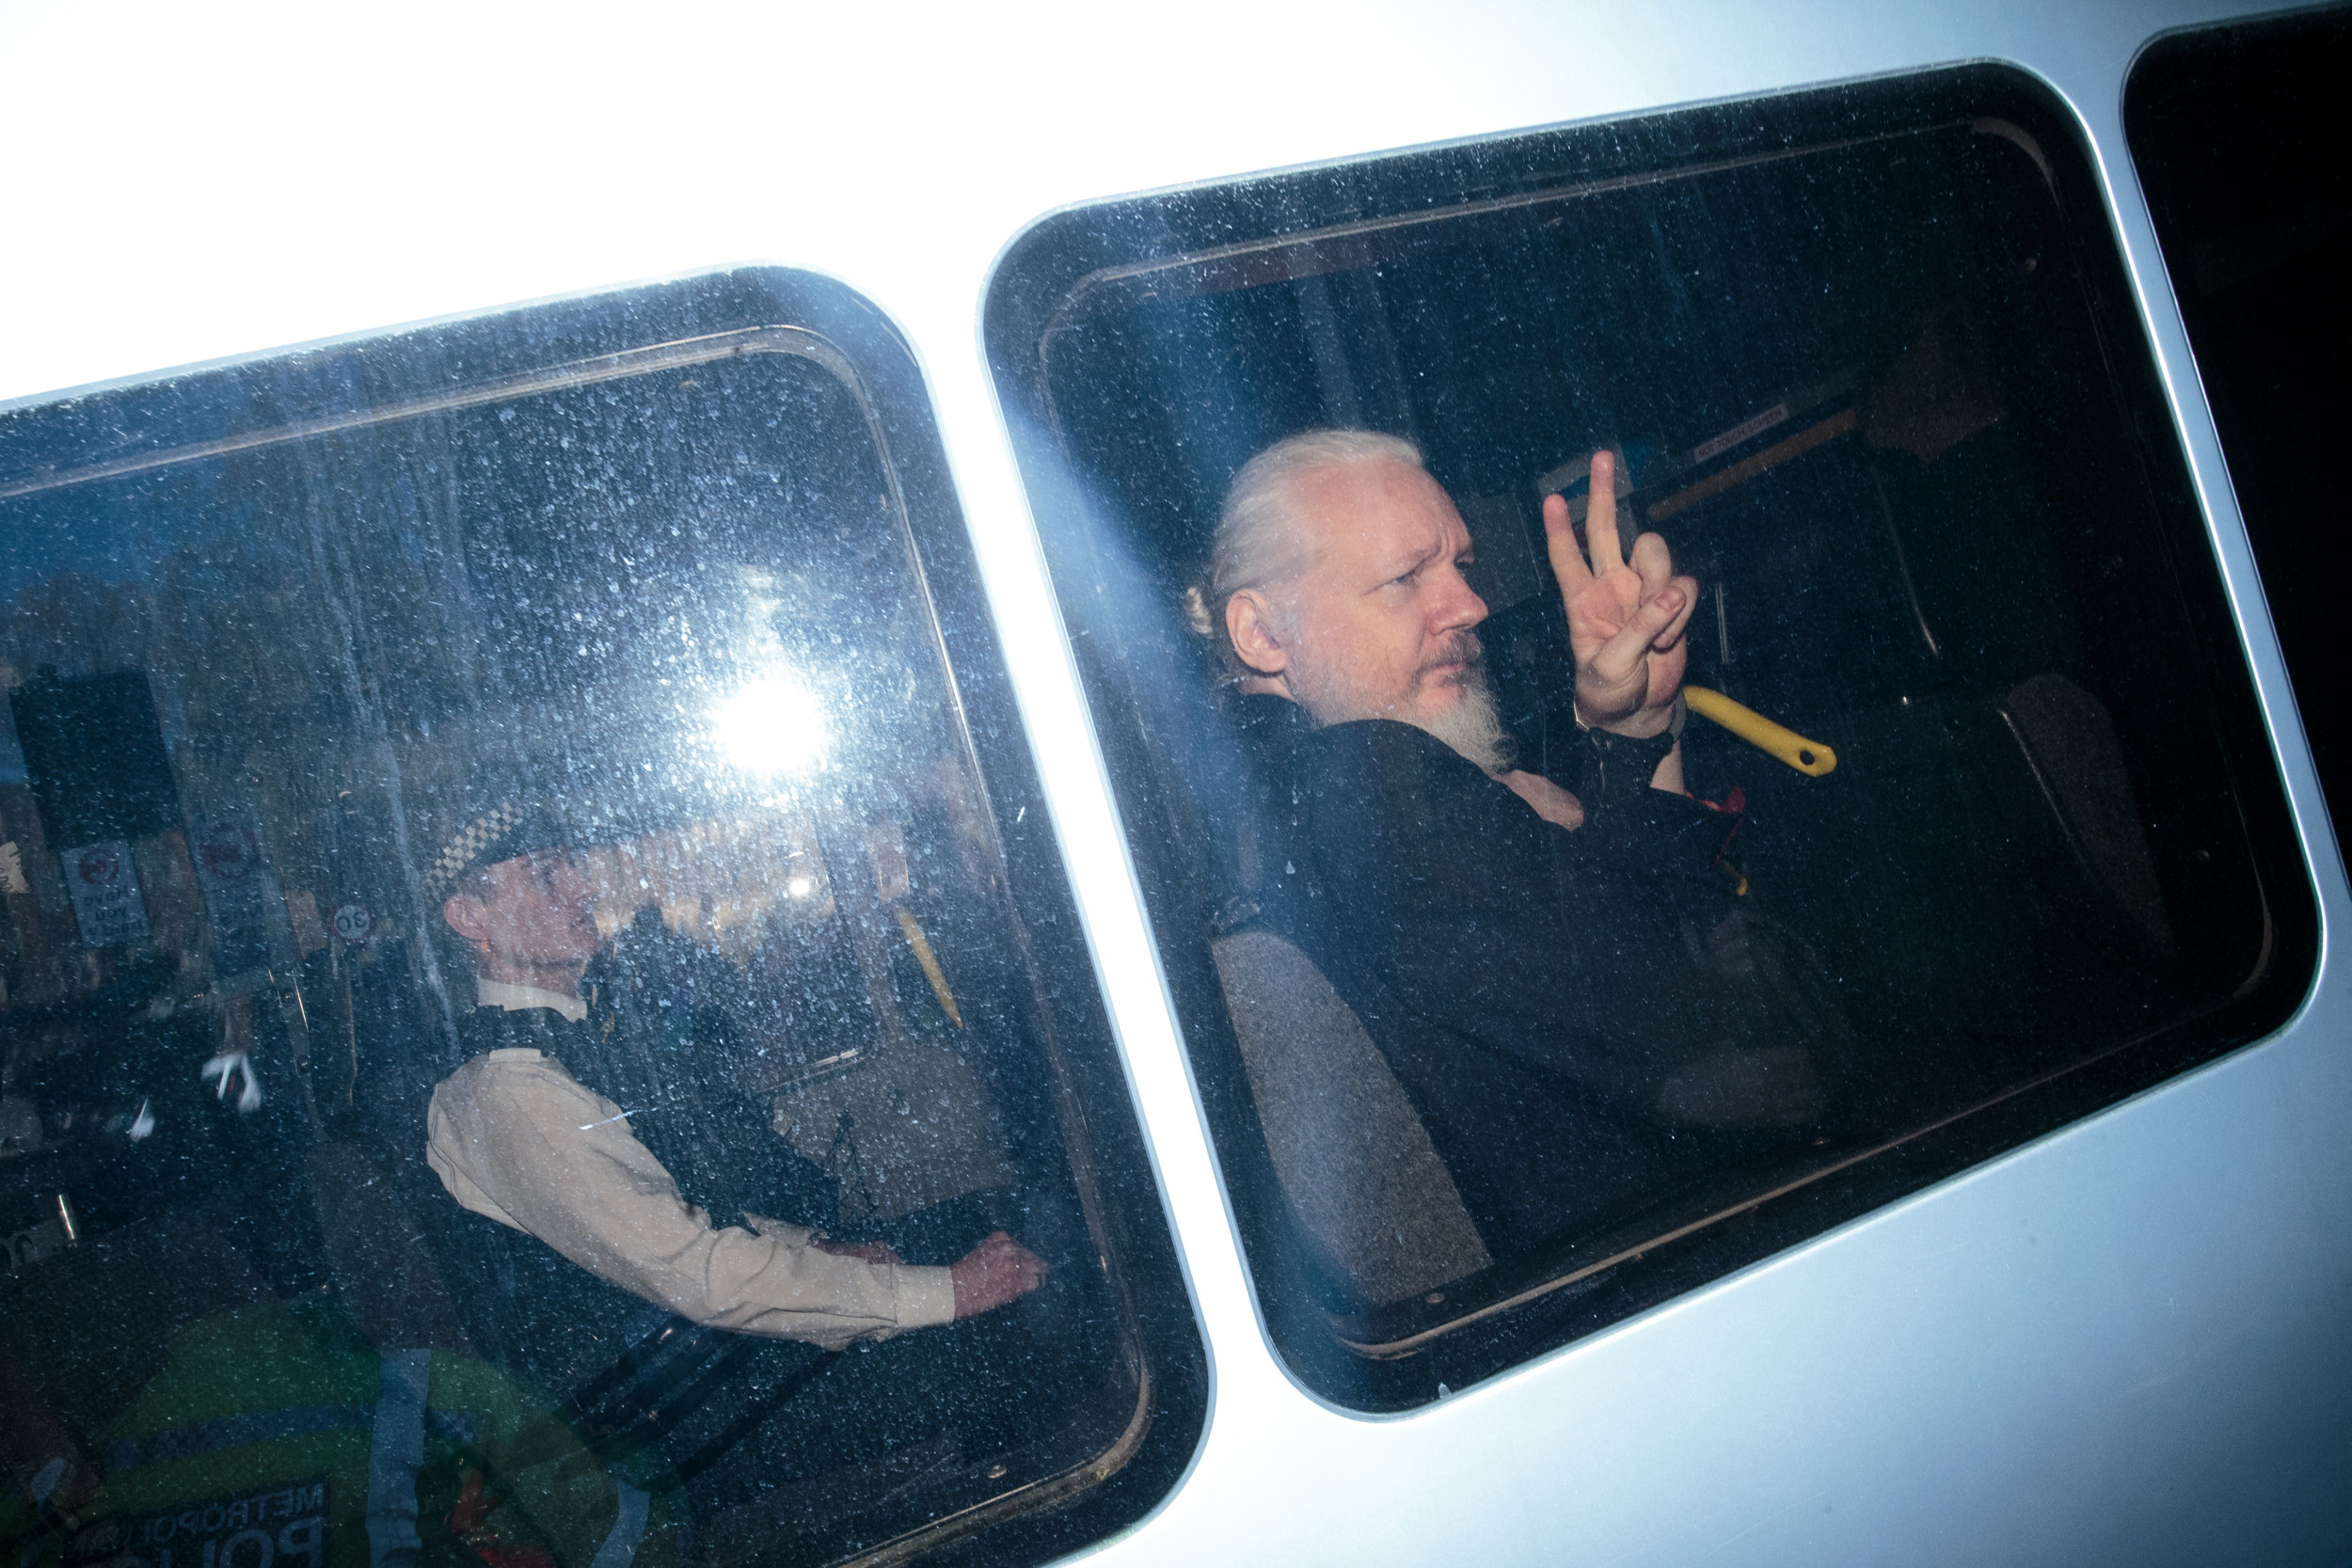 Julian Assange to 'Seek Review' of U.K. Extradition Ruling, Lawyer Calls It 'Disturbing'